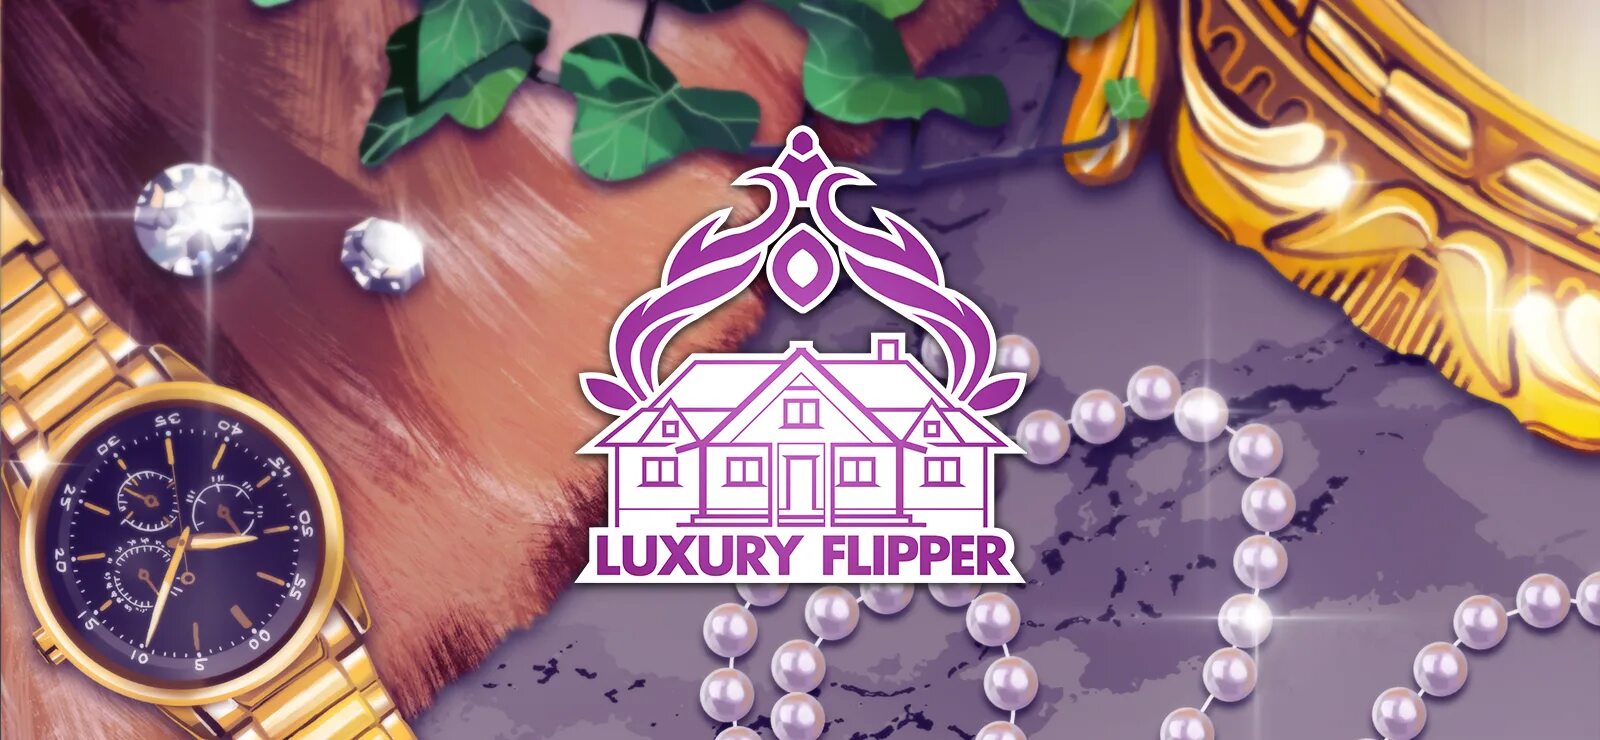 Luxury games. Luxury Flipper. Хаус Флиппер Luxury. Luxury DLC House. Luxury DLC House Flipper лого.